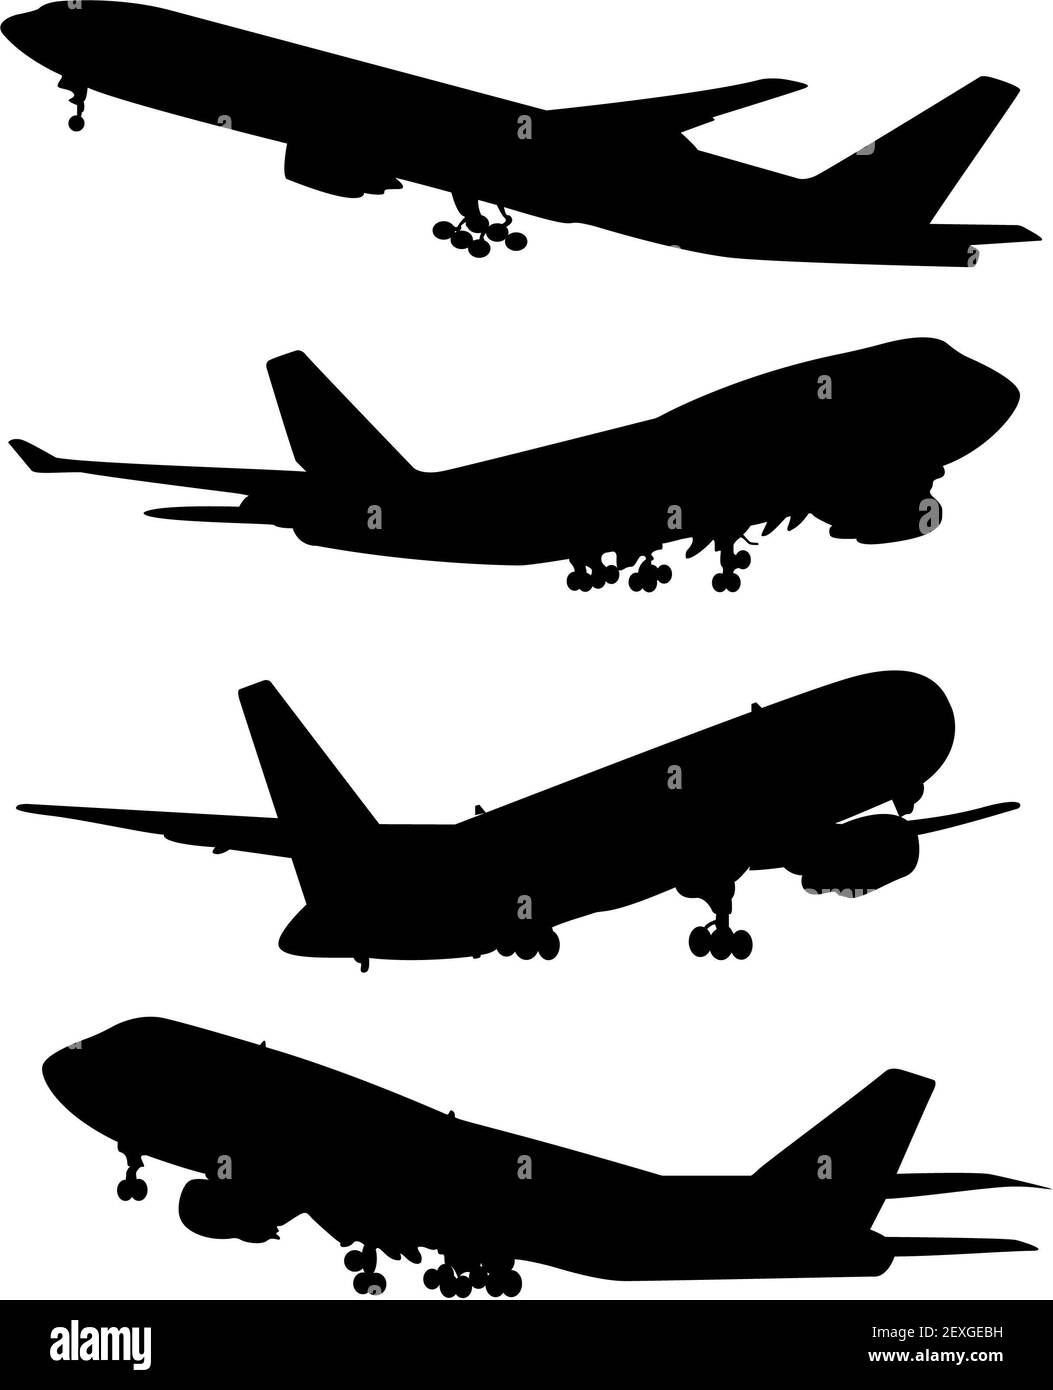 Airplane silhouette set Stock Photo